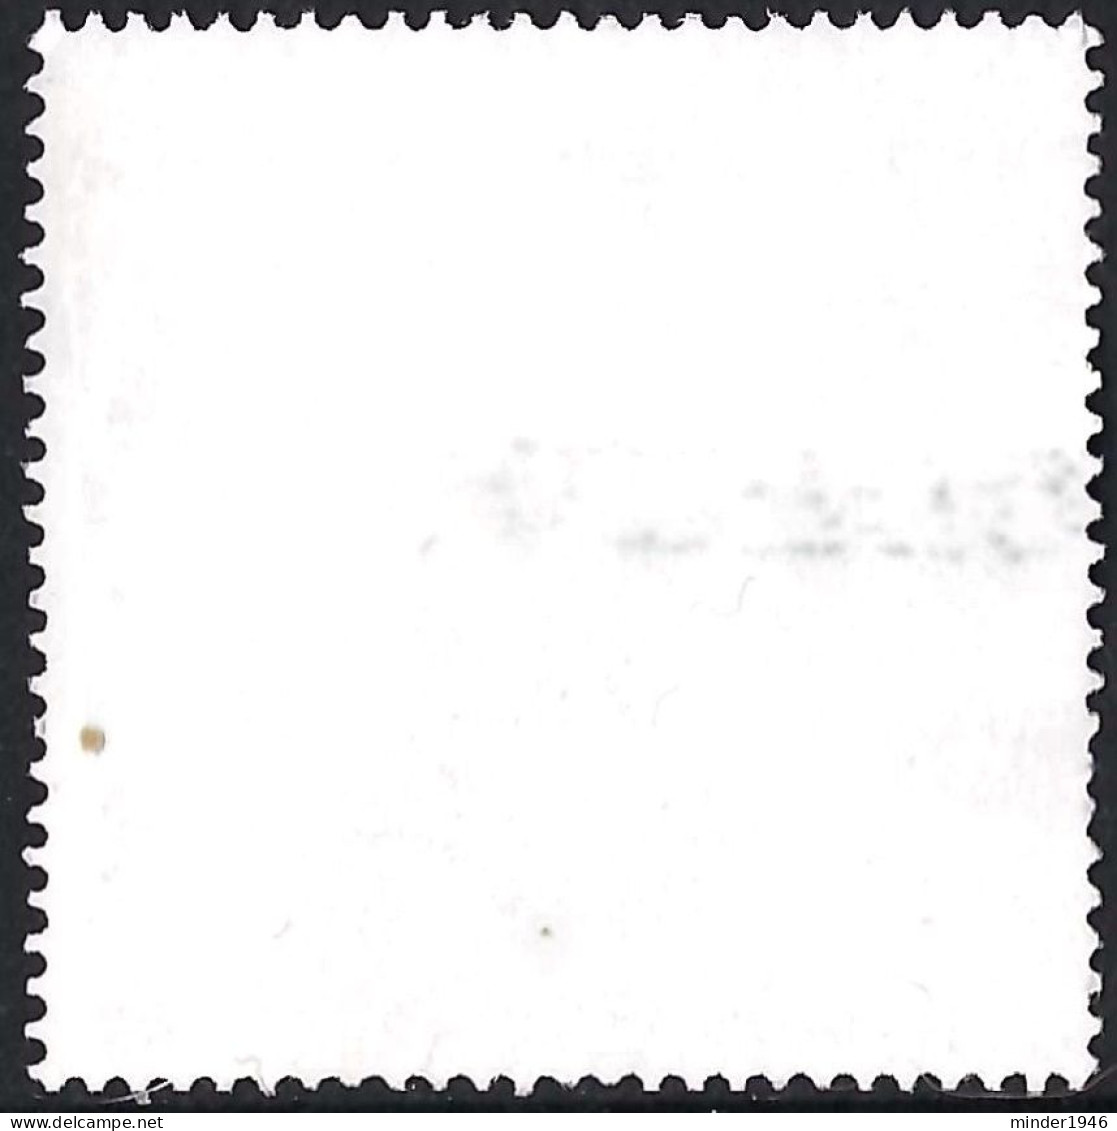 NEW ZEALAND 2008 QEII $1.50 Multicoloured, Christmas - Mary & Child SG3094 FU - Used Stamps